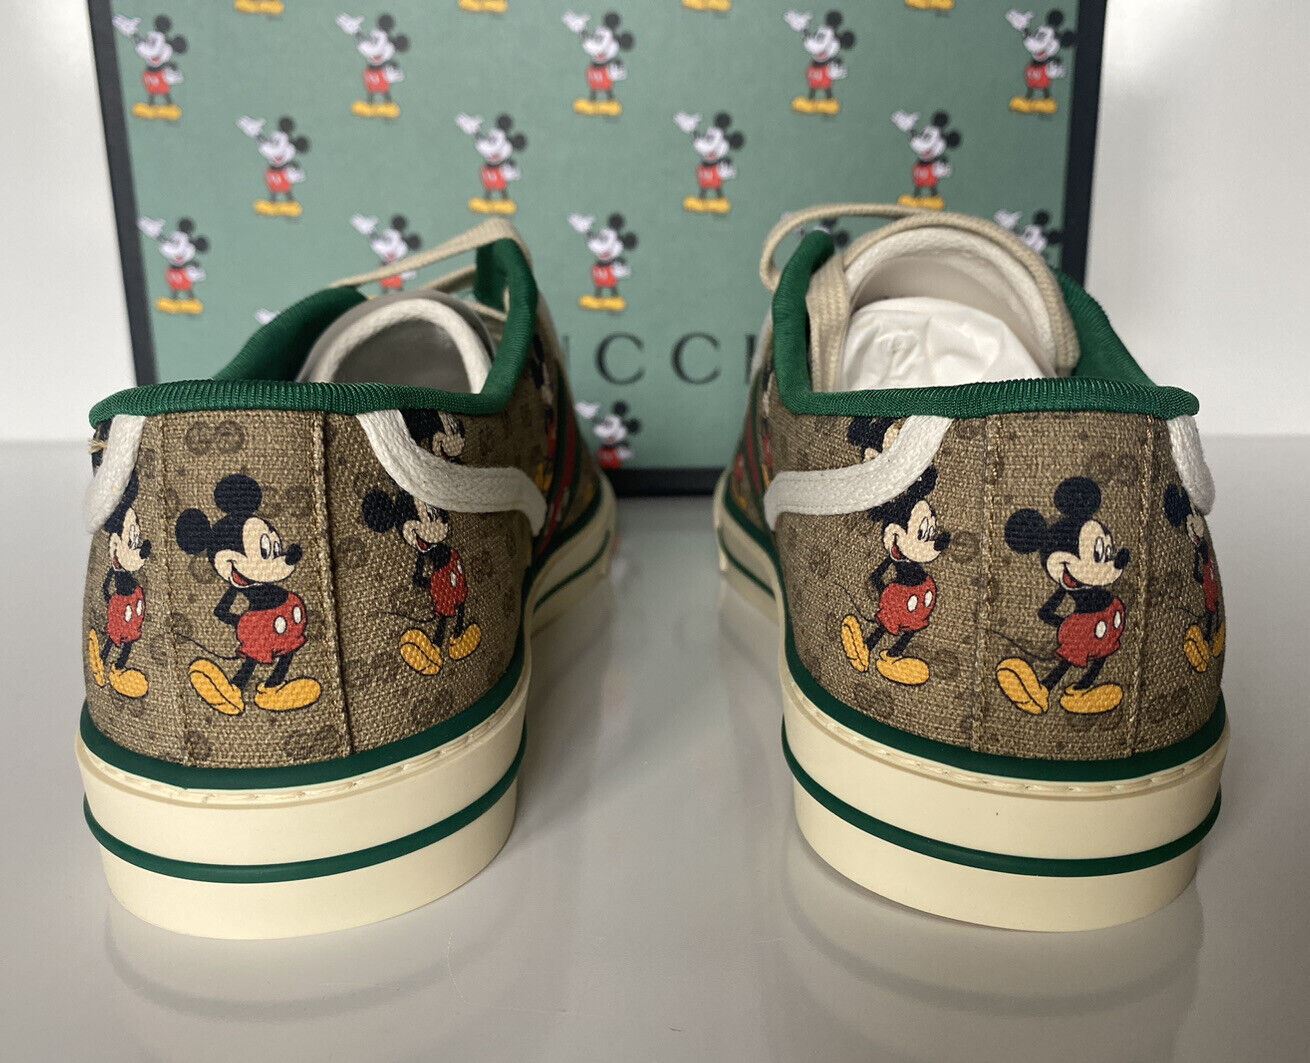 NIB Gucci Herren Mickey Mouse Sneakers 10,5 US (Gucci 10) Hergestellt in Italien 606111 